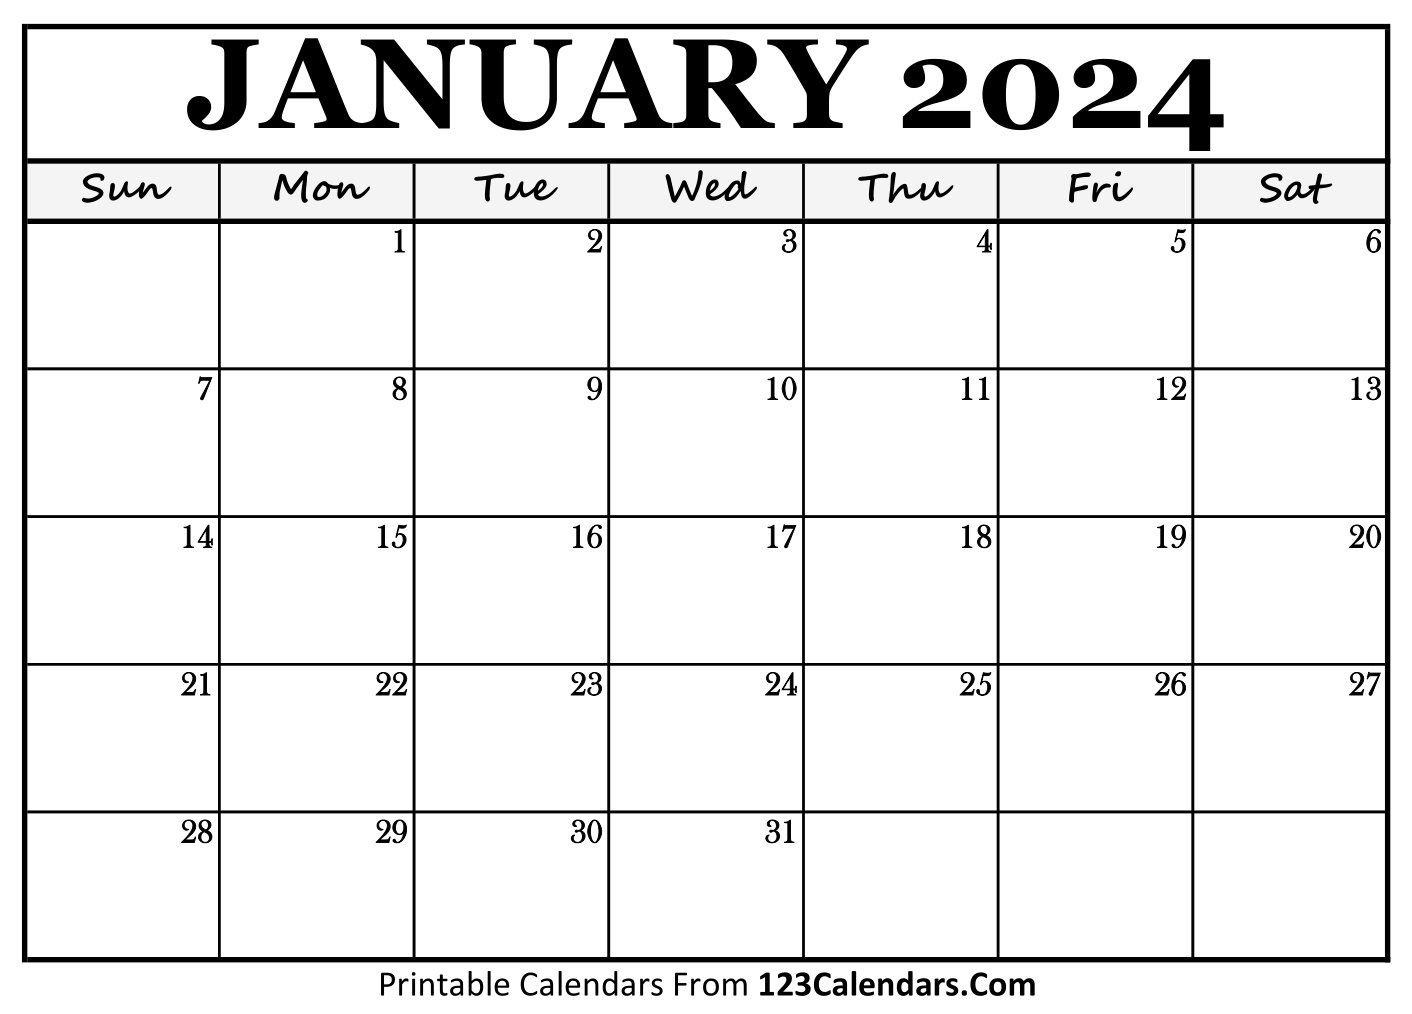 Printable January 2024 Calendar Templates - 123Calendars | Free Printable Calendar 2024 January